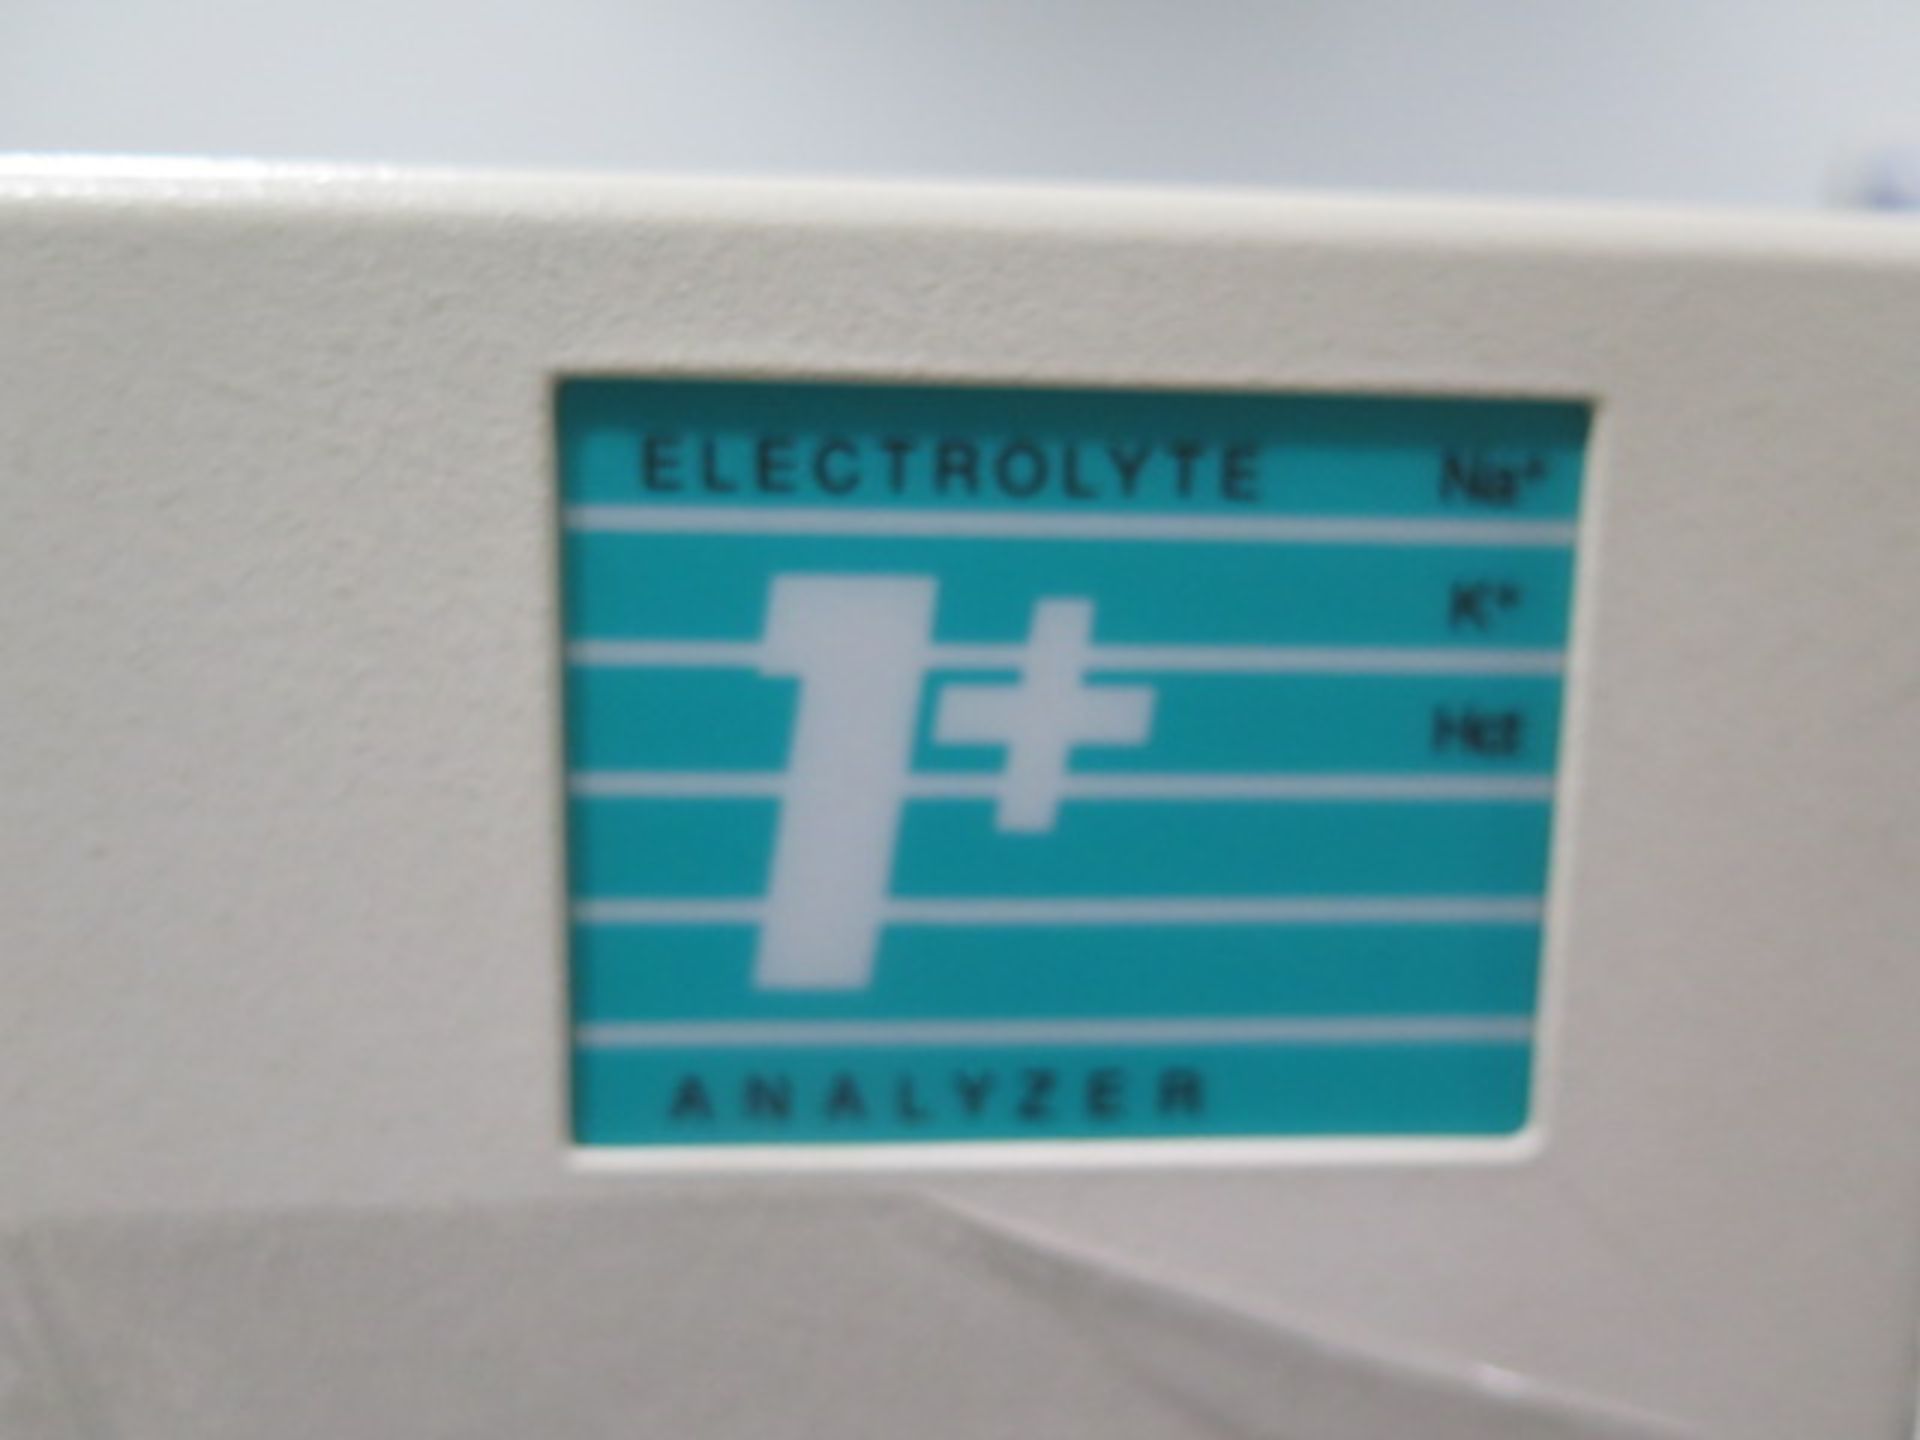 Nova Biomedical 1+ Electrolyte Analyzer Na+ K+ Hct w/ Computer (SOLD AS-IS - NO WARRANTY) - Image 11 of 13